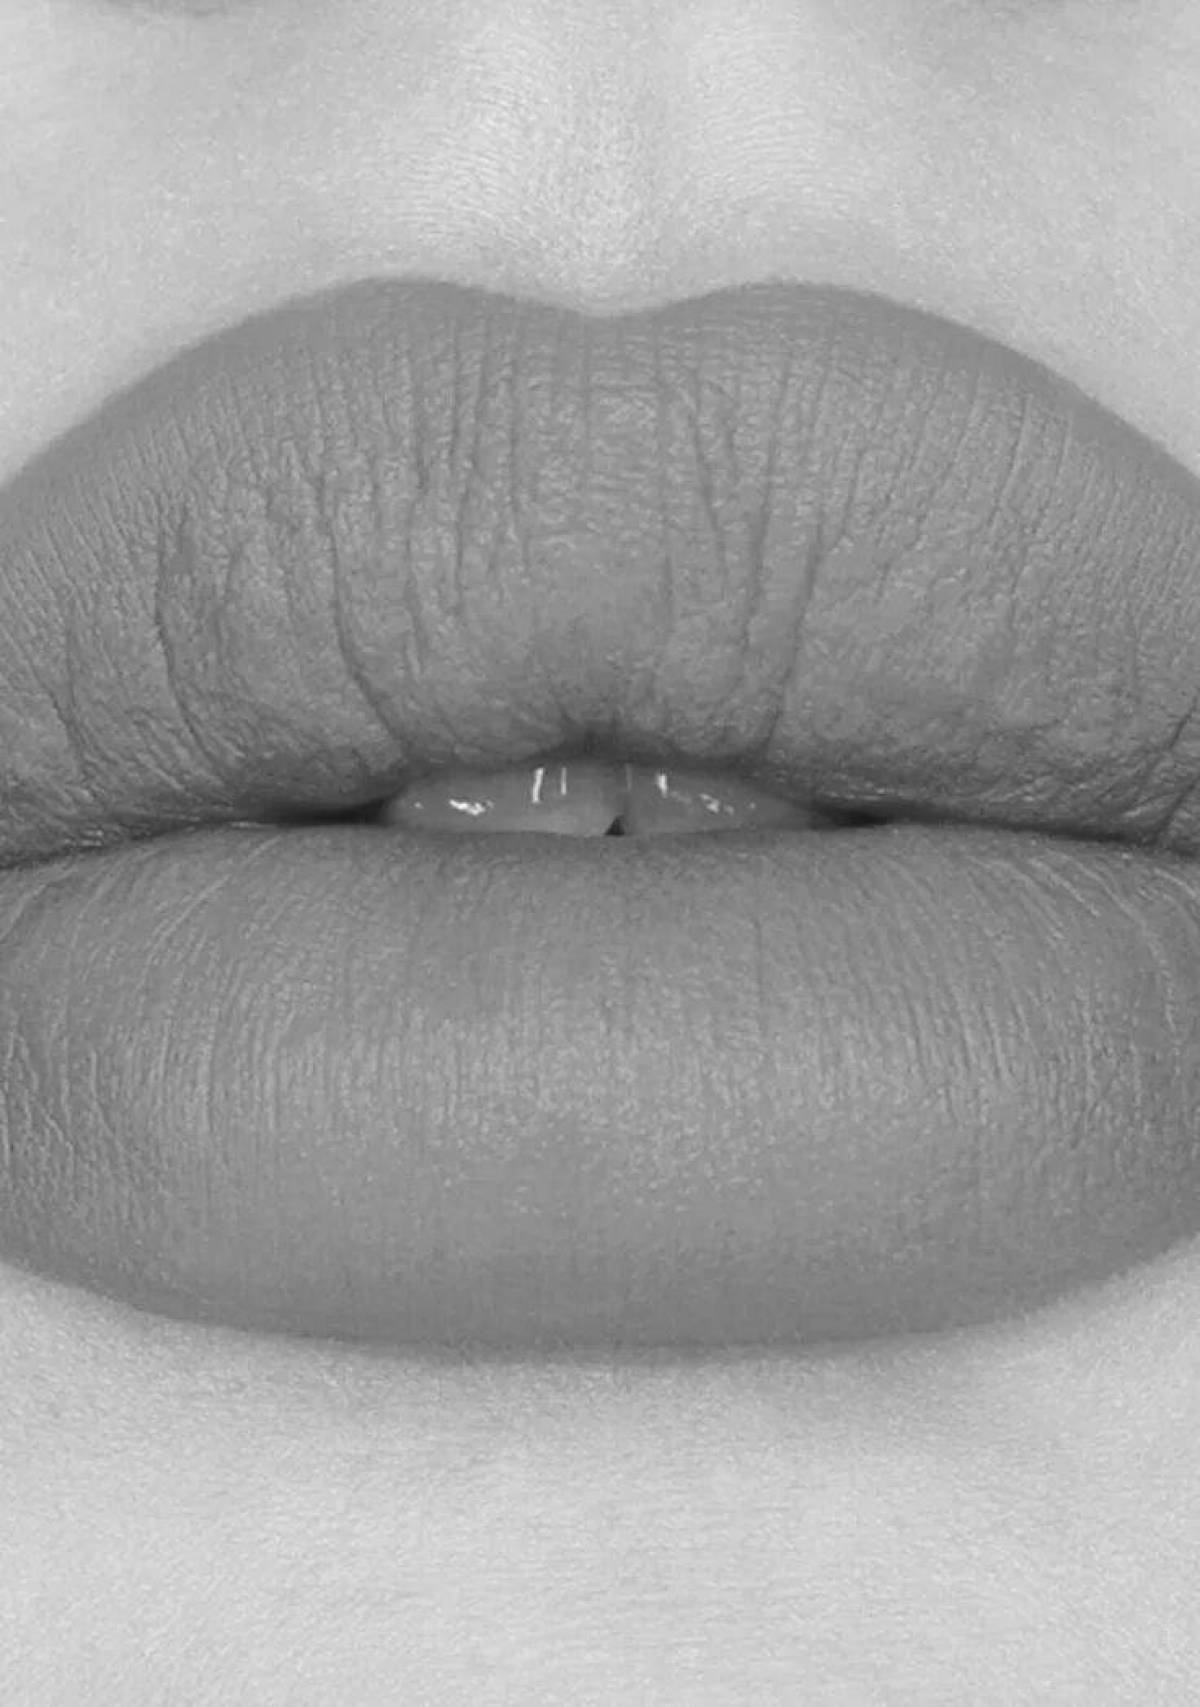 Lips without lipstick plump beautiful photo for #5